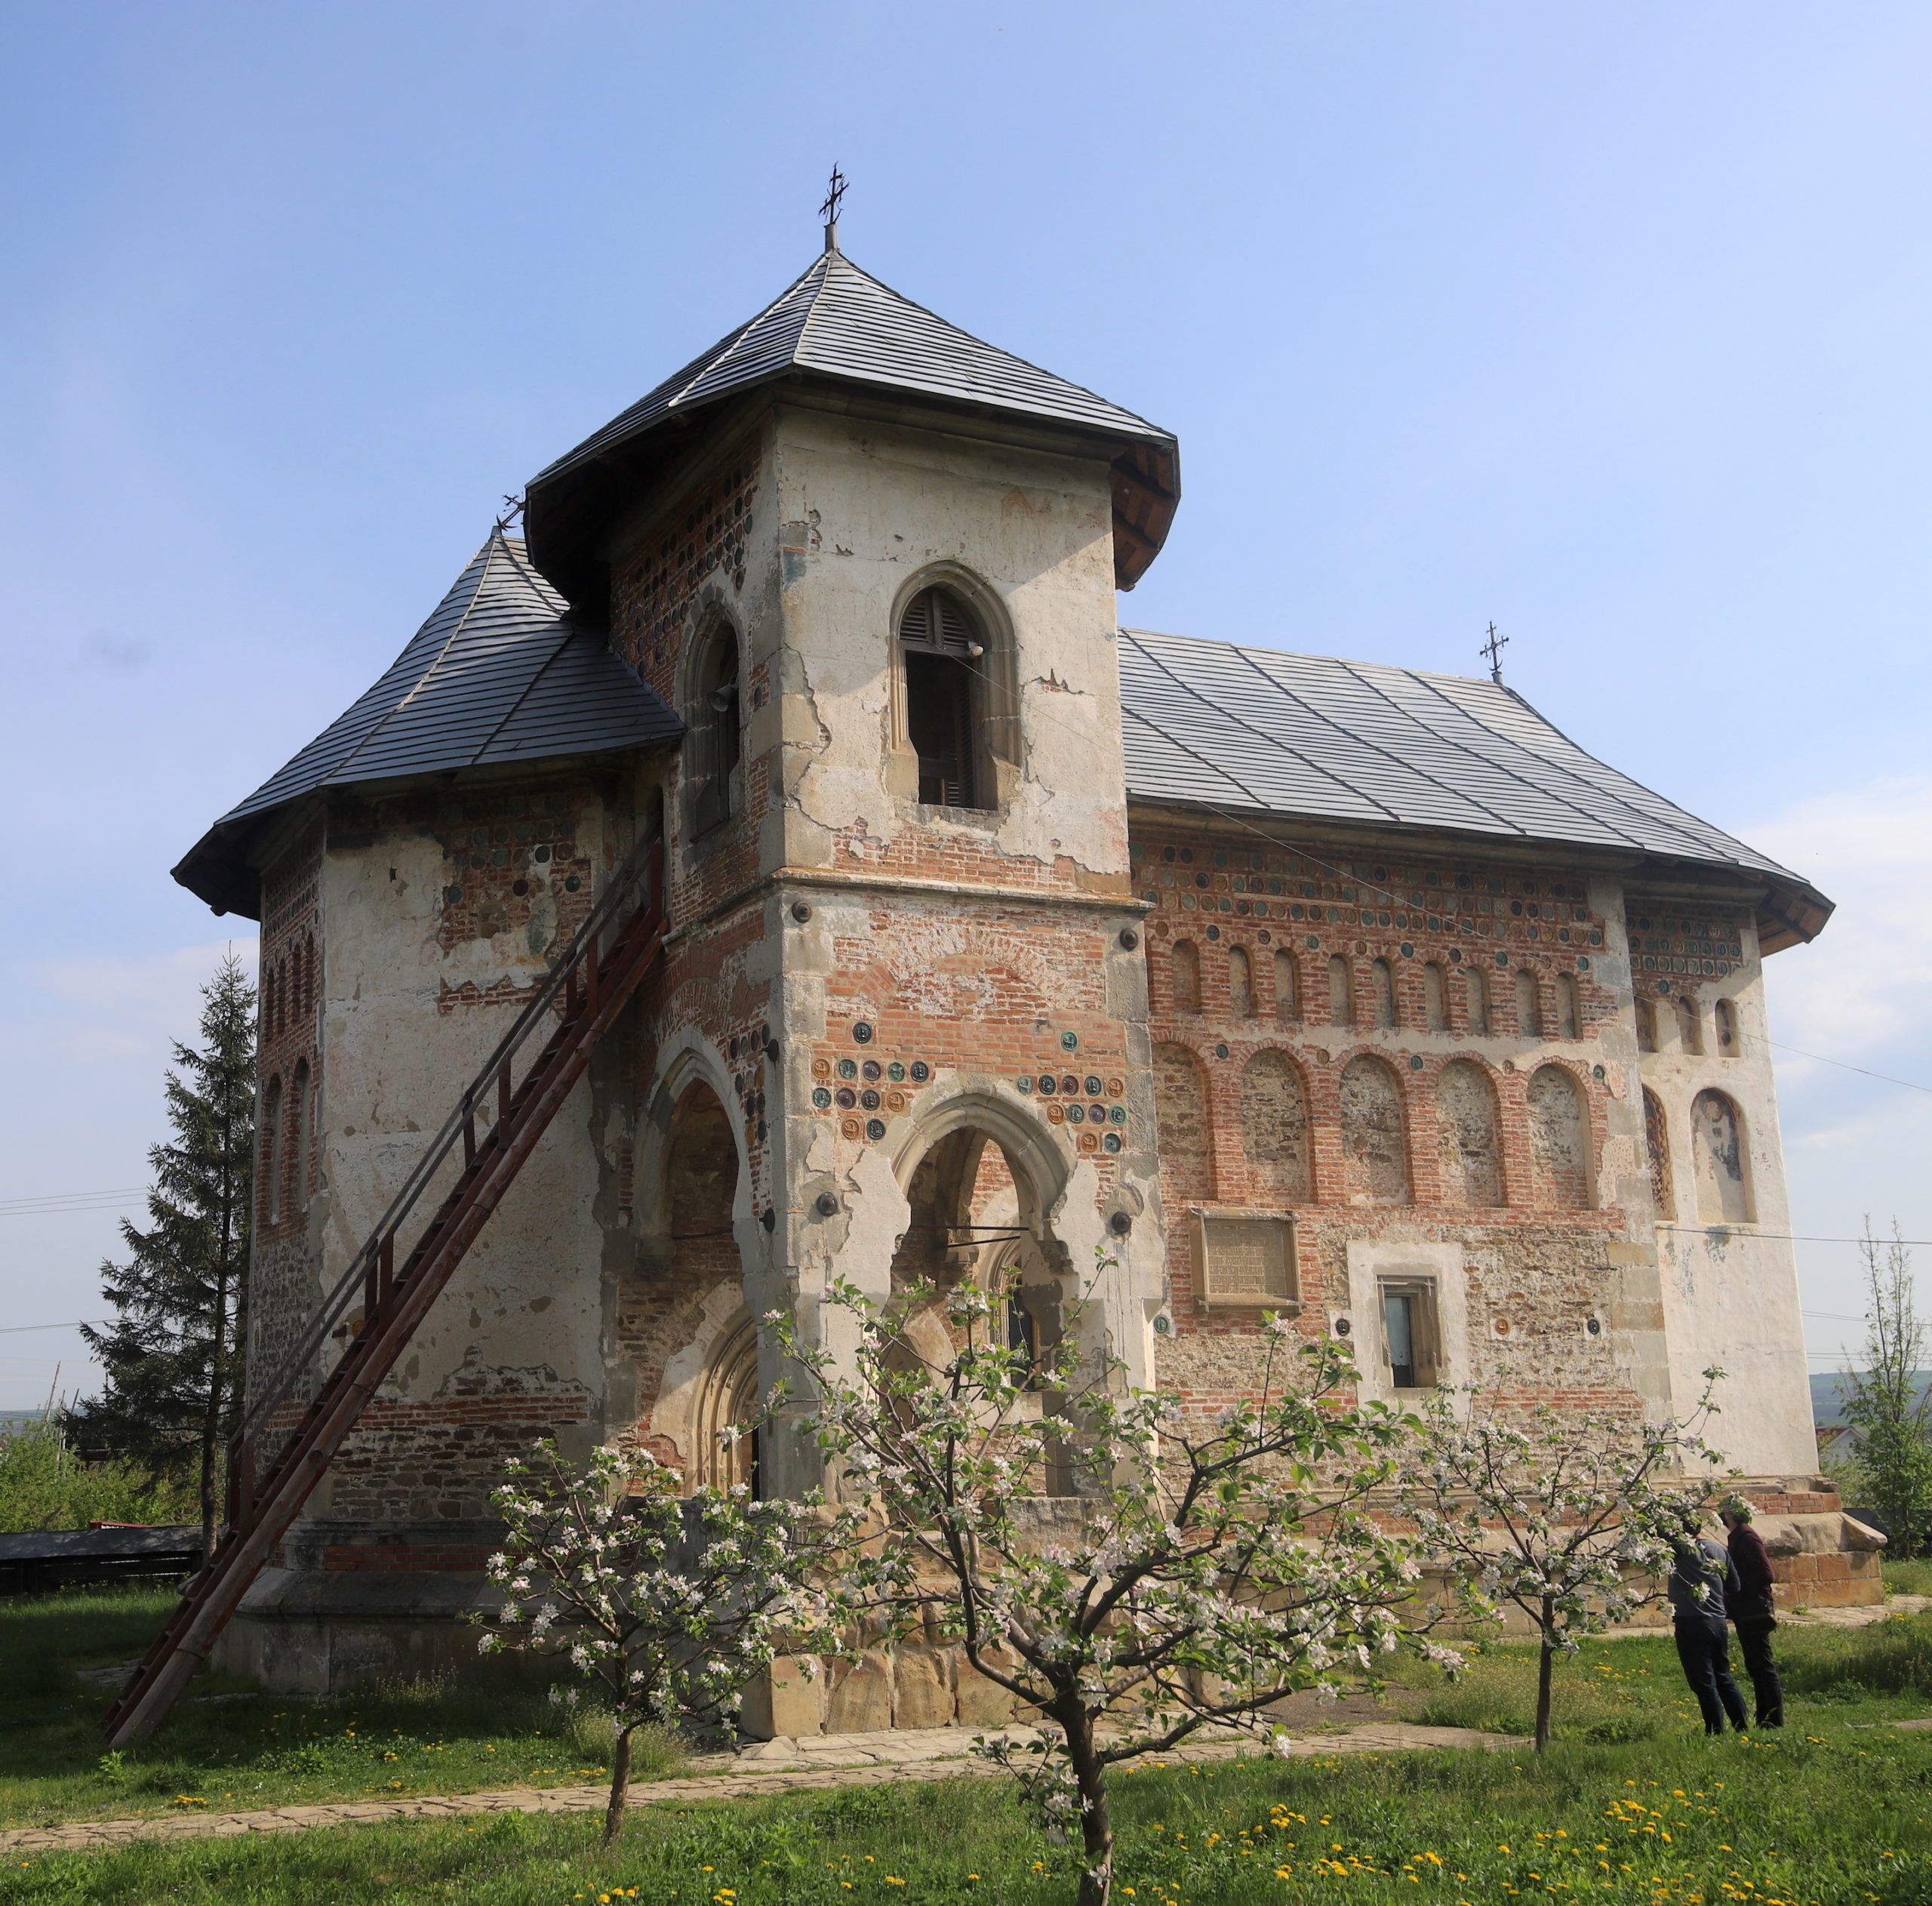 Church of St. Nicholas, Balinesti, Romania, built in 1499 (photo by Vlad Bedros, 2019)